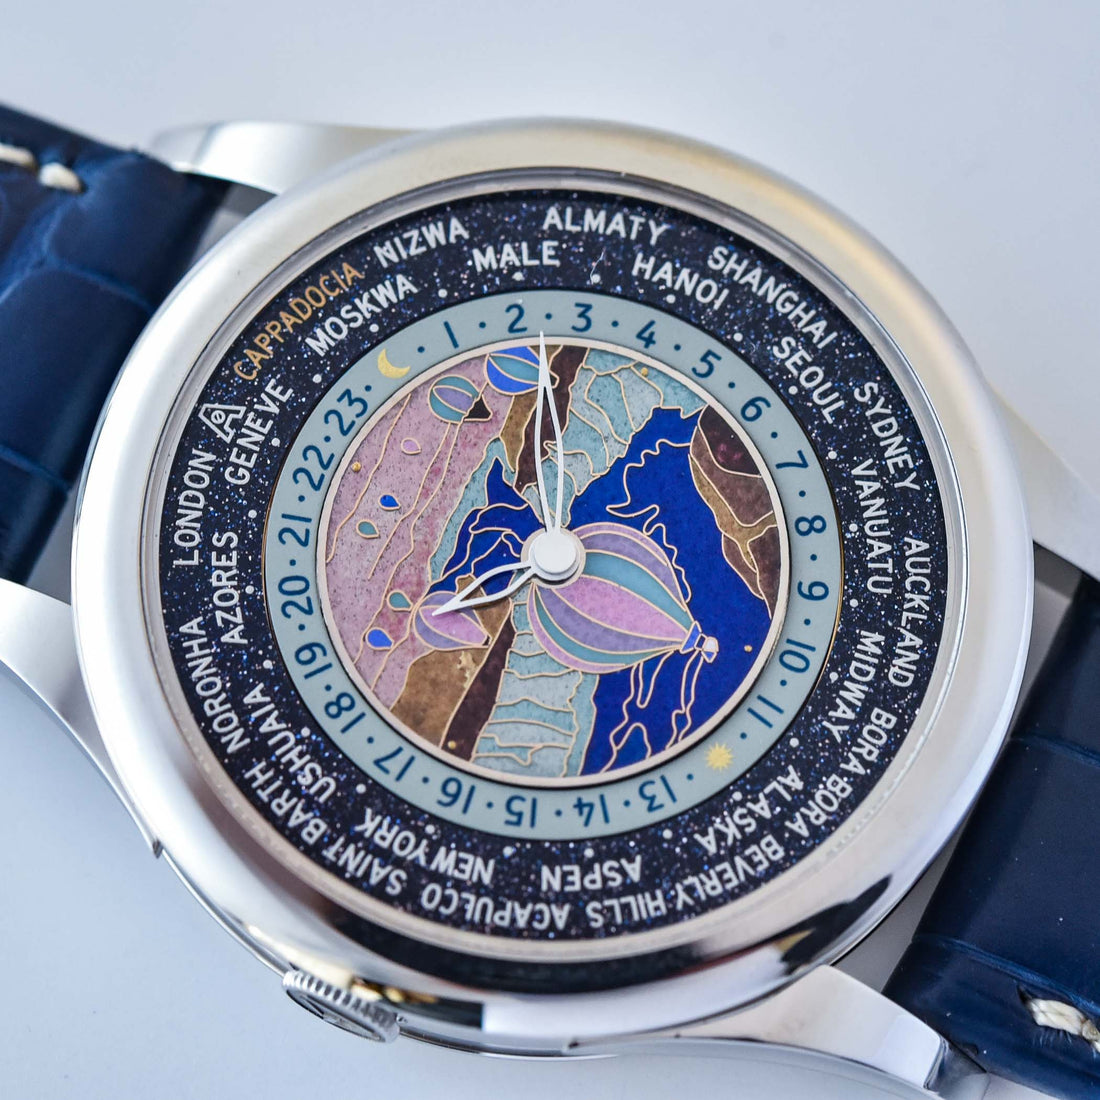 BCHH x Andersen Genève's Celestial Voyager: A Masterpiece of Cloisonné Artistry